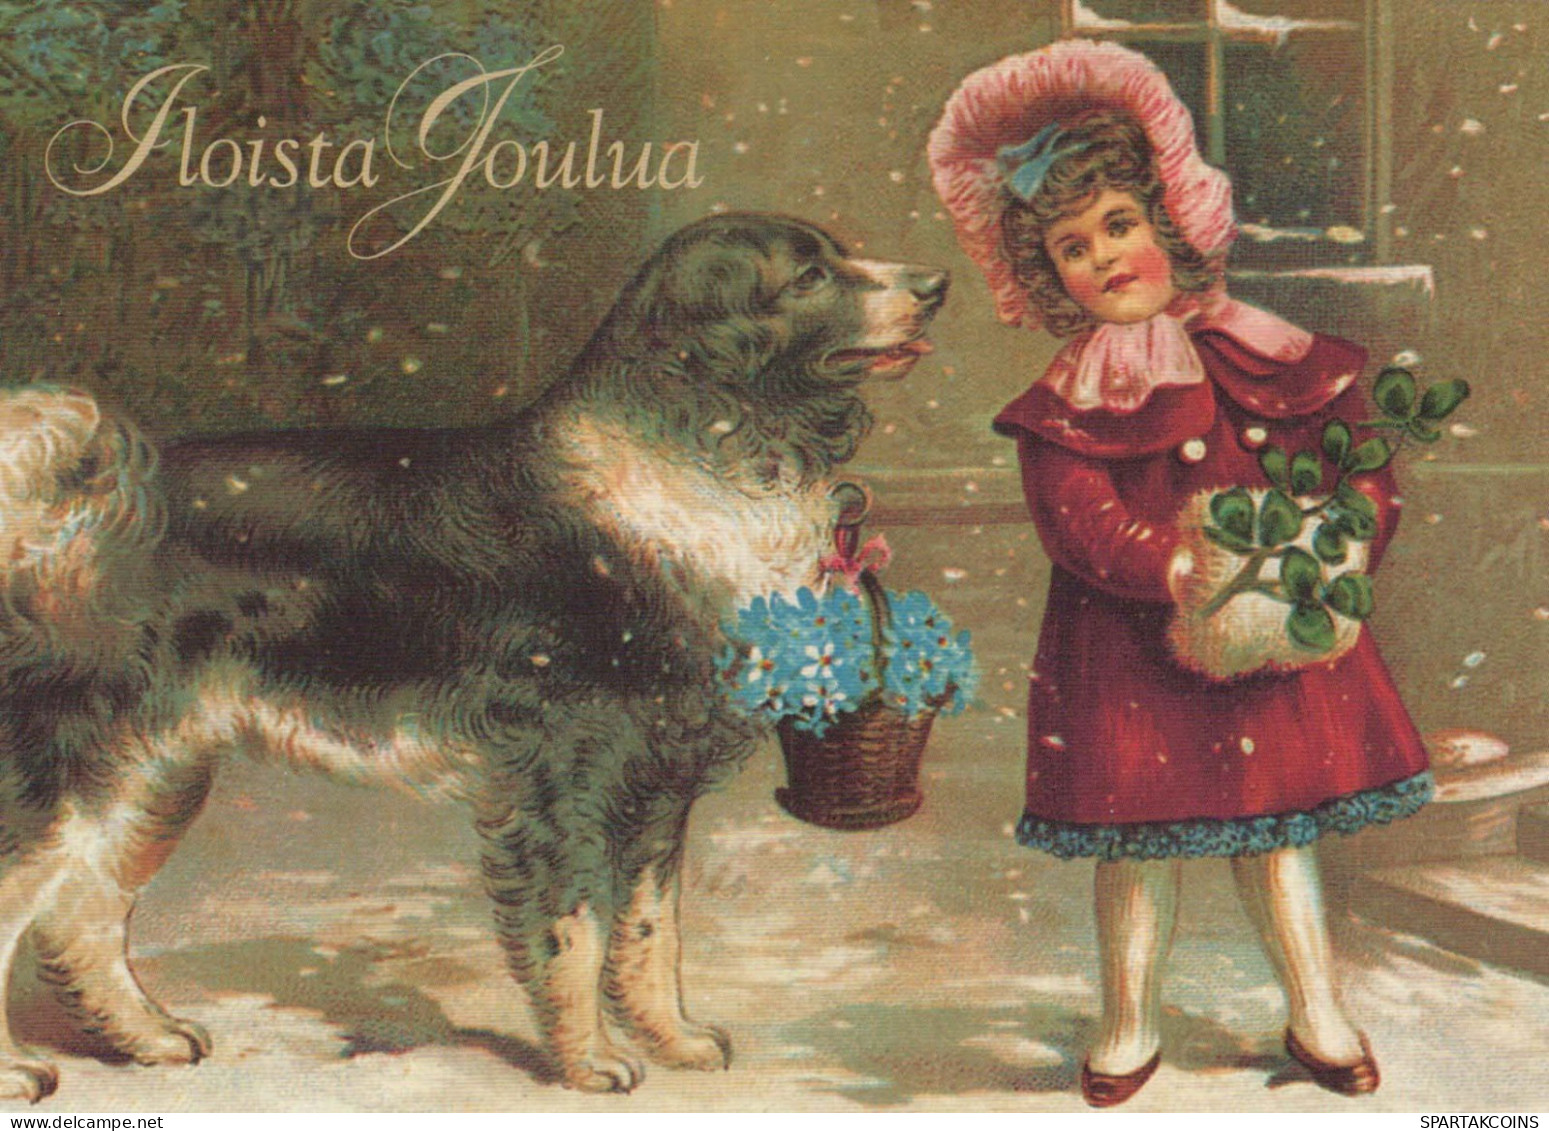 CANE Animale Vintage Cartolina CPSM #PBQ642.IT - Dogs